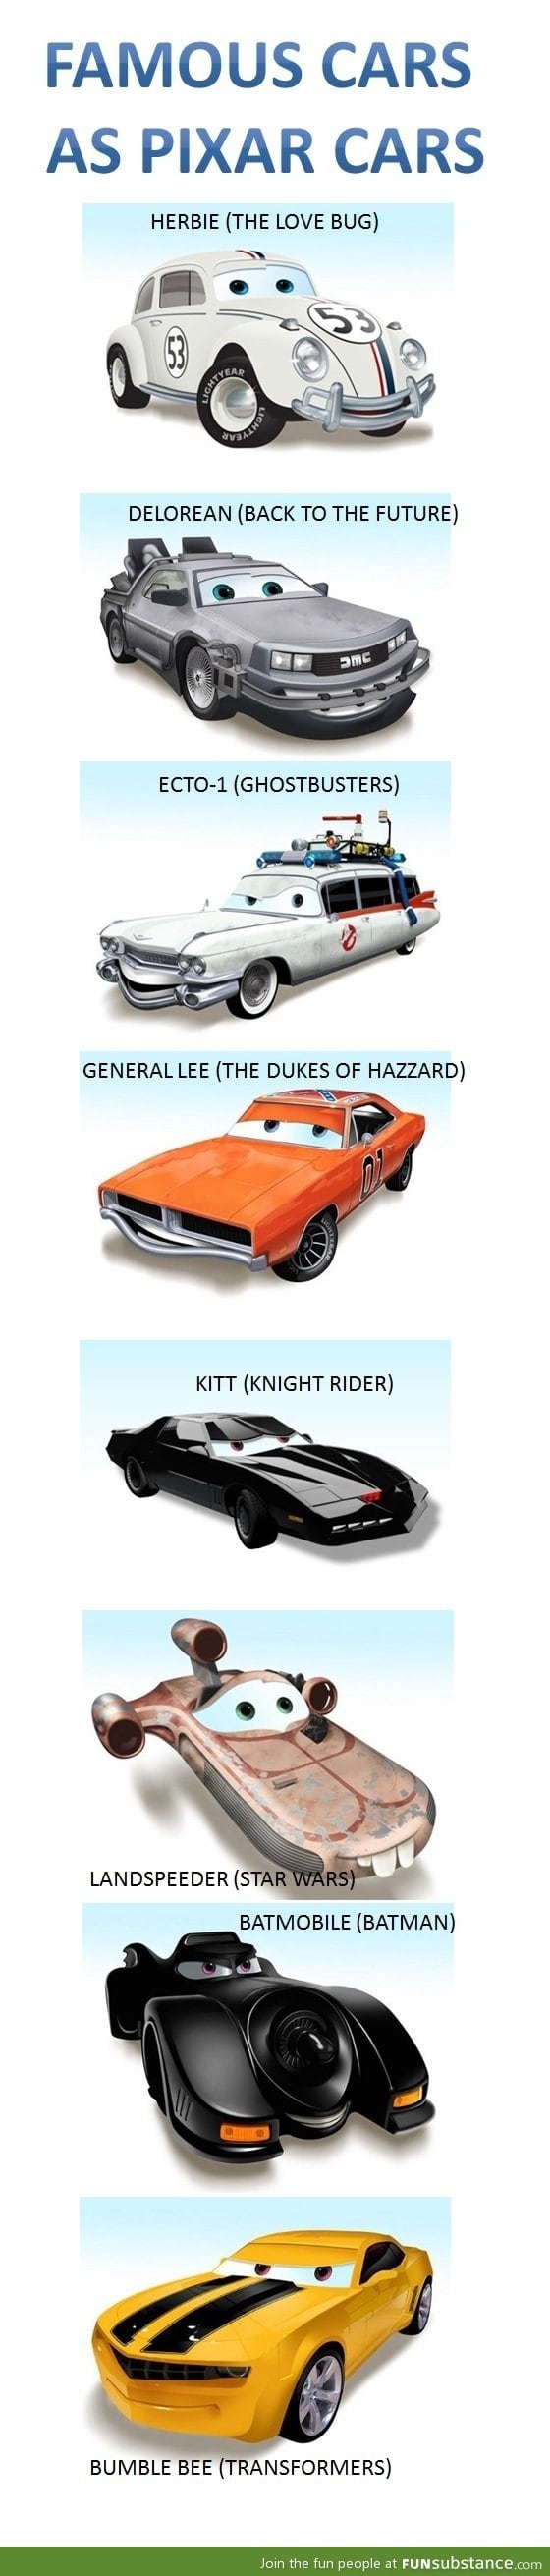 Famous cars as pixar cars